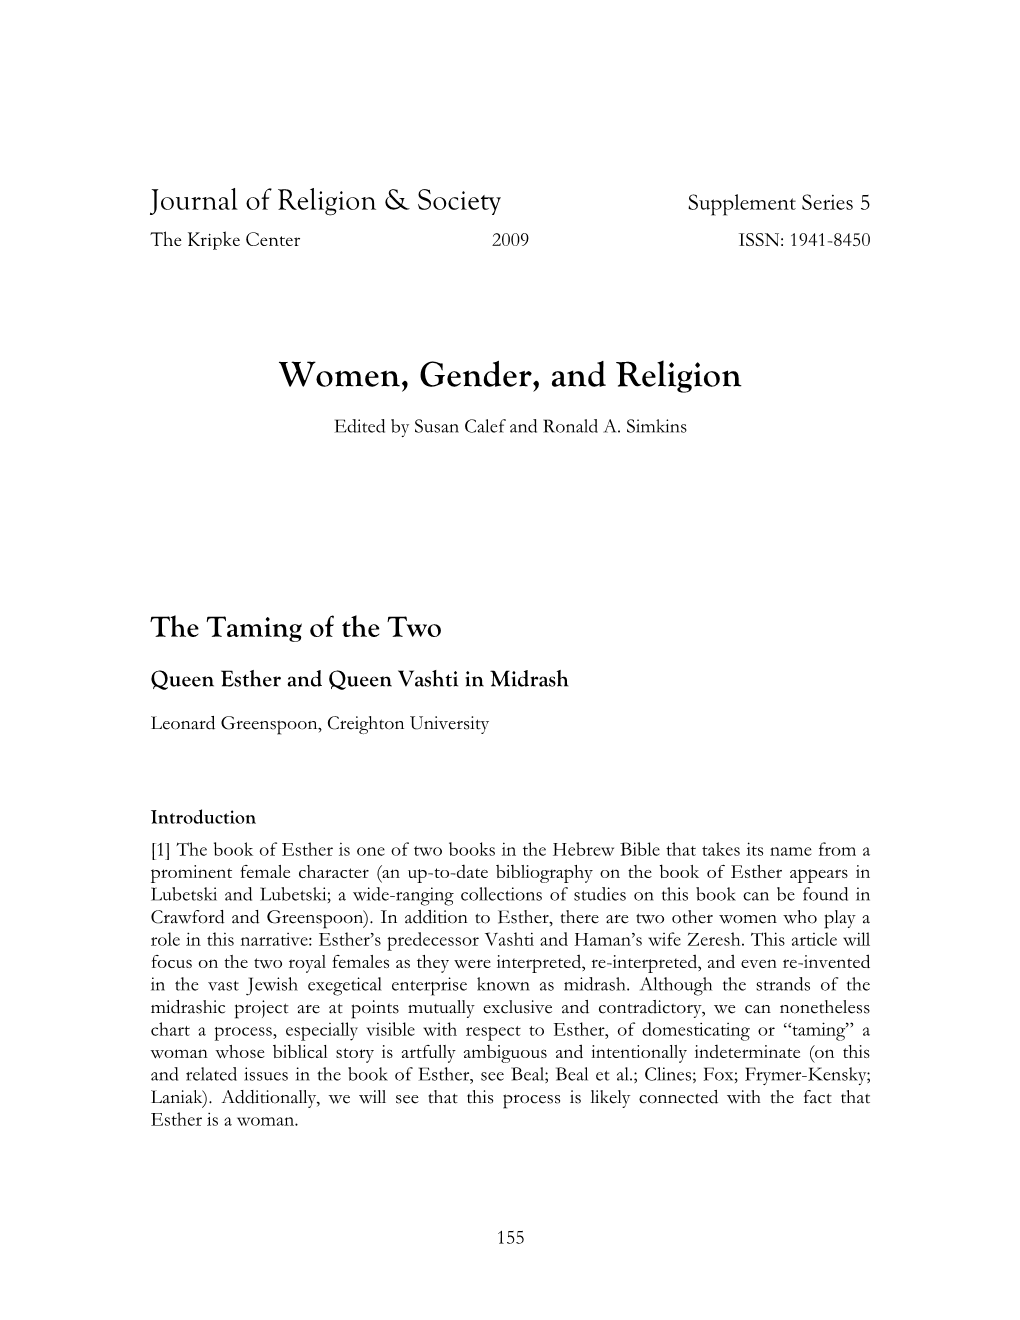 Women, Gender, and Religion